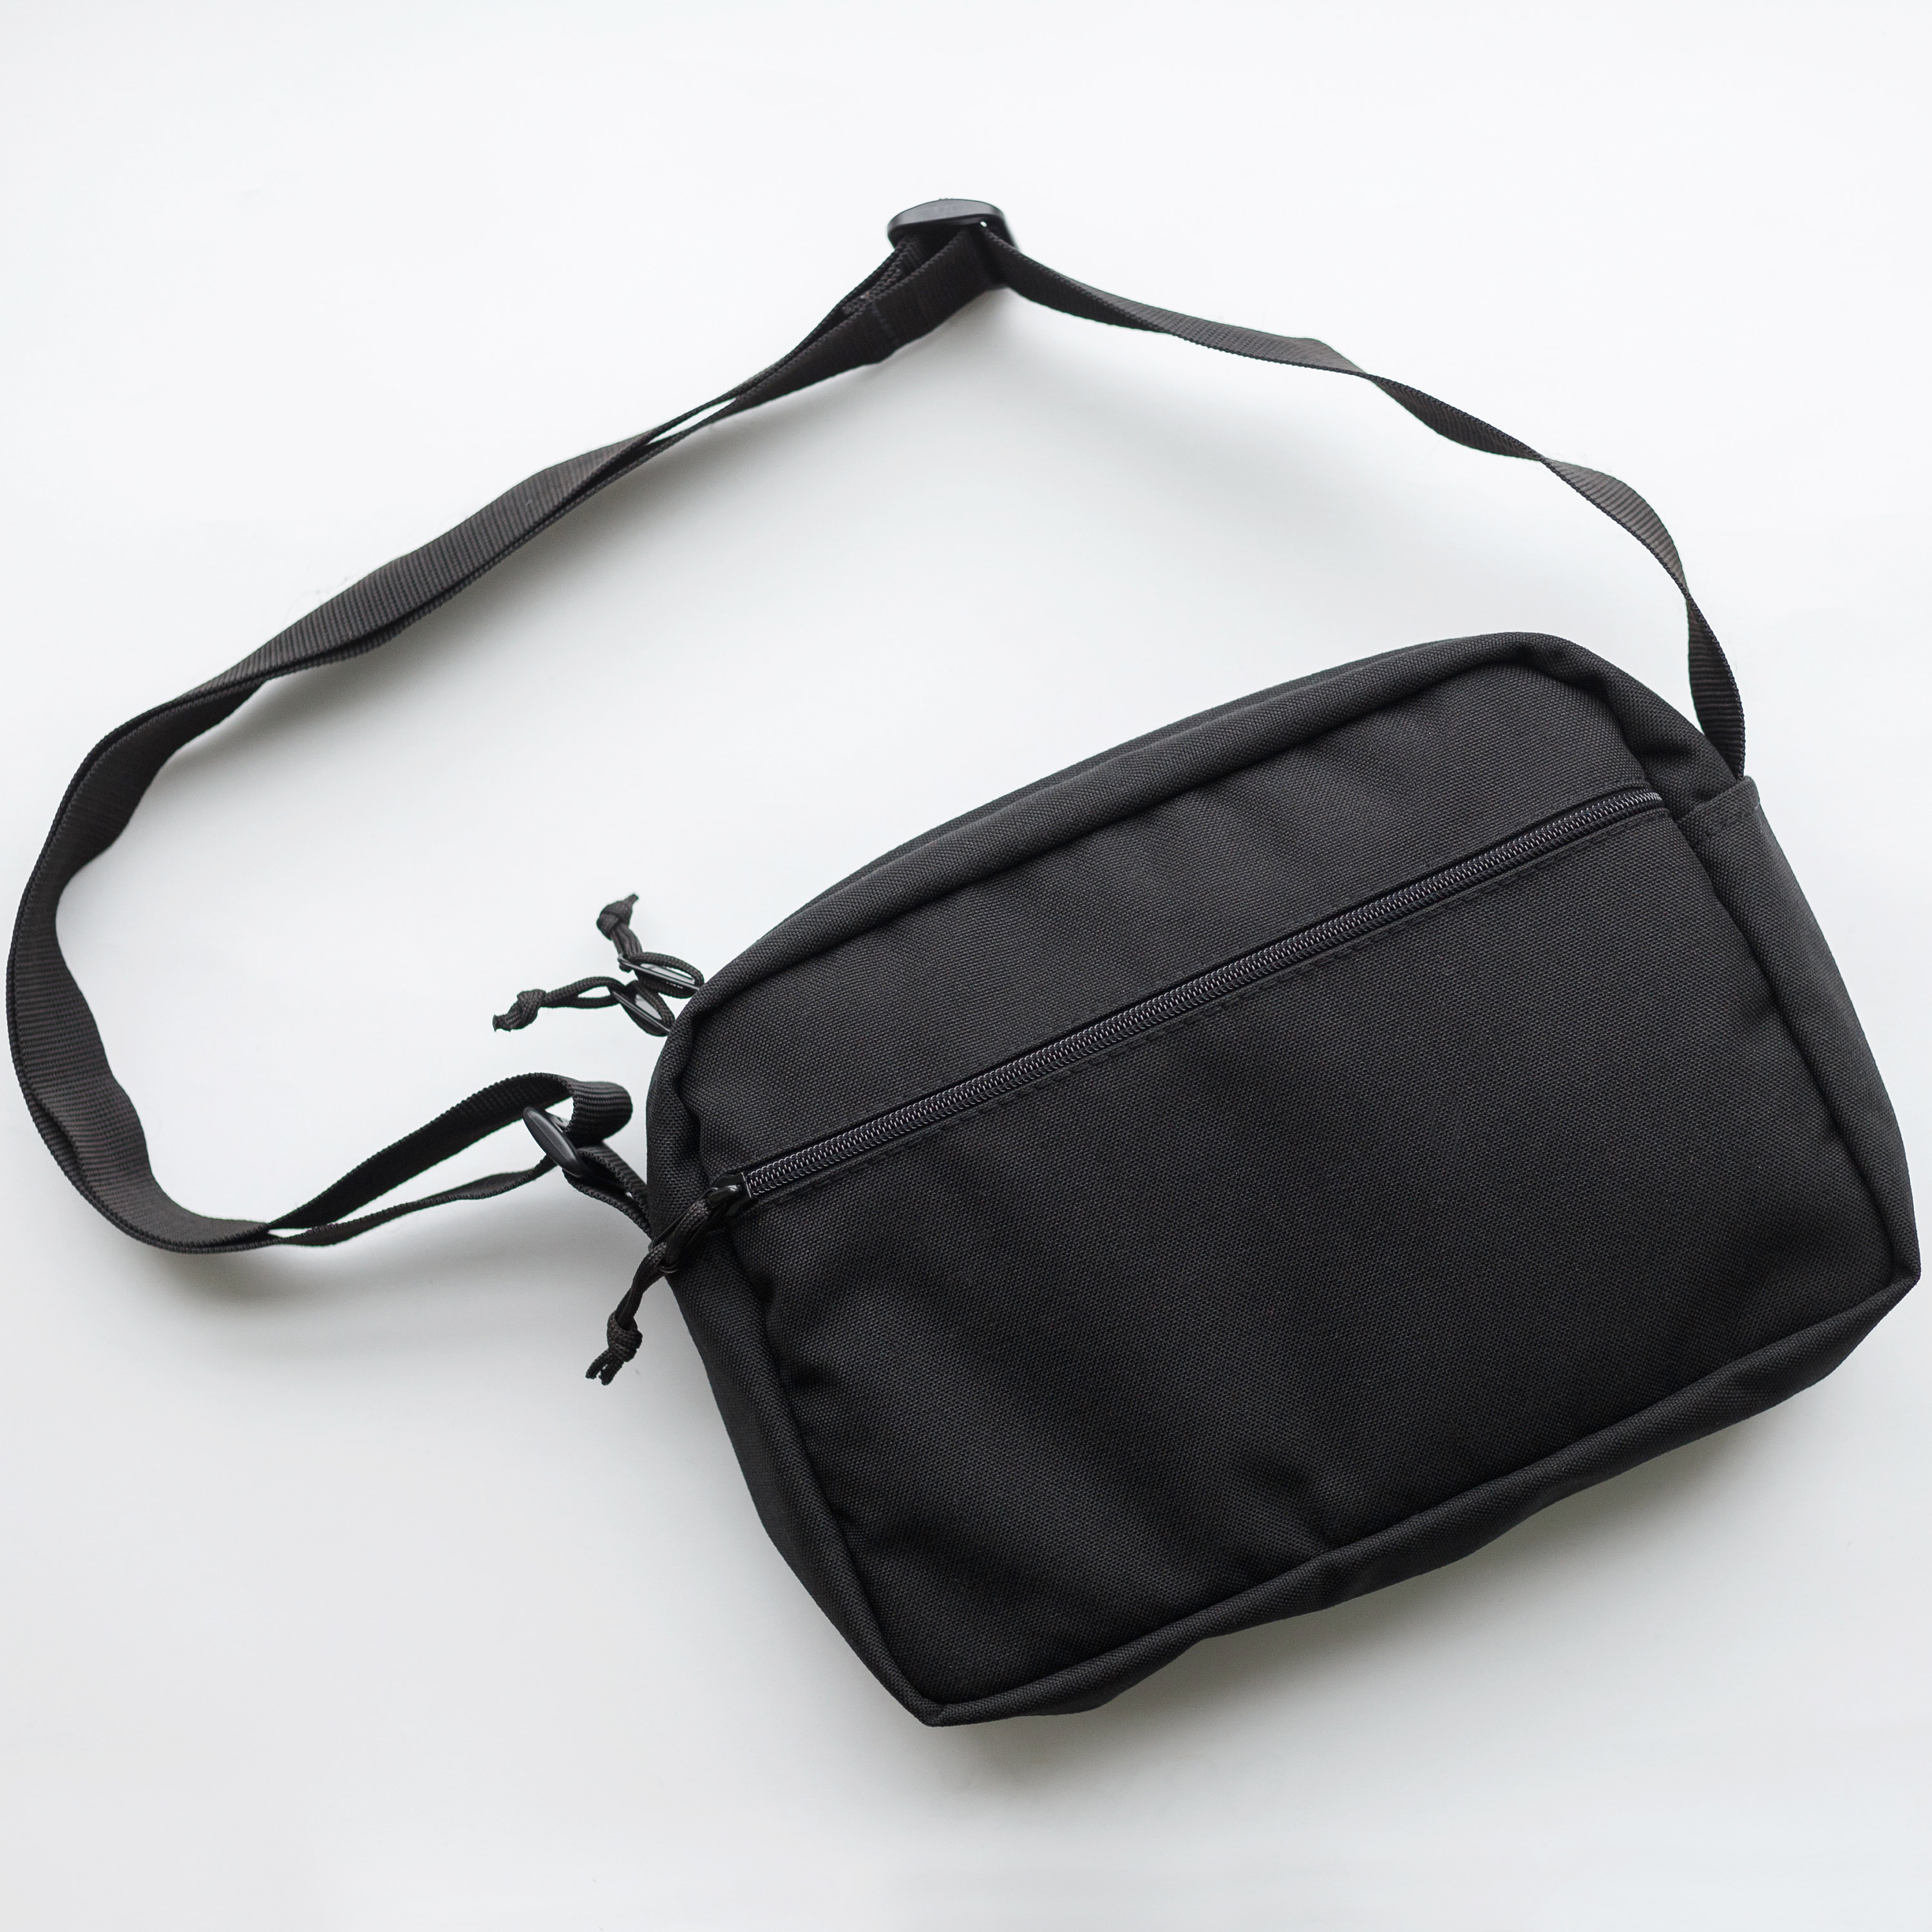 IPad Bag / Cordura Messenger bag / Shoulder Bag | Etsy